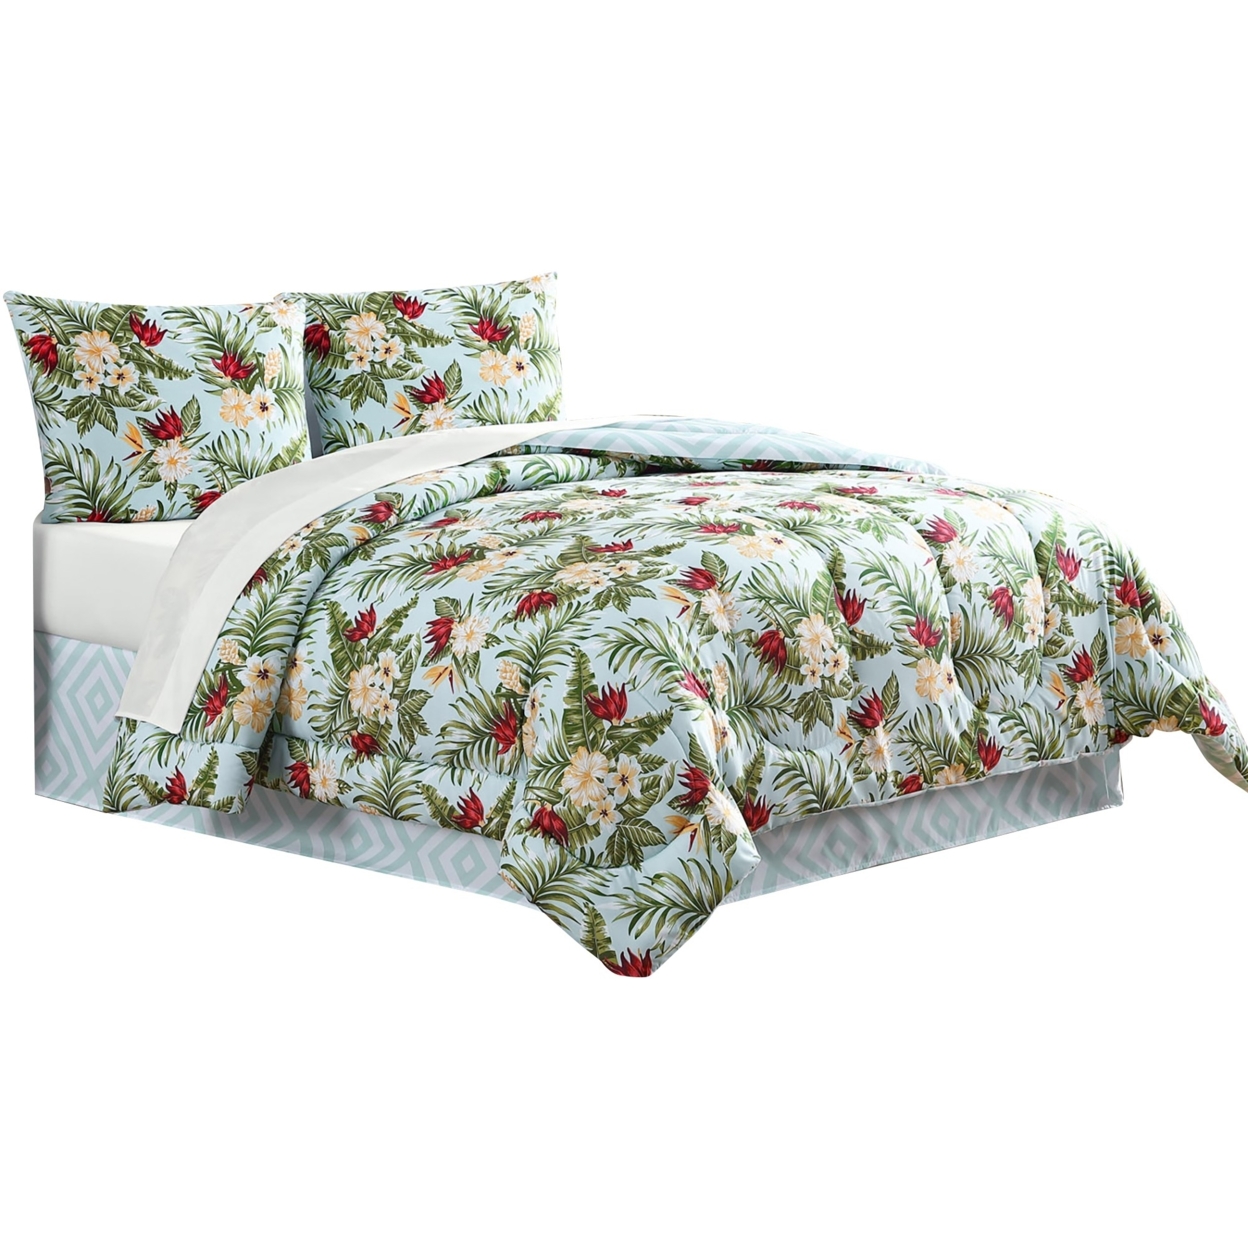 Elia 8 Piece Polyester King Comforter Set, Tropical Design, Green, White- Saltoro Sherpi